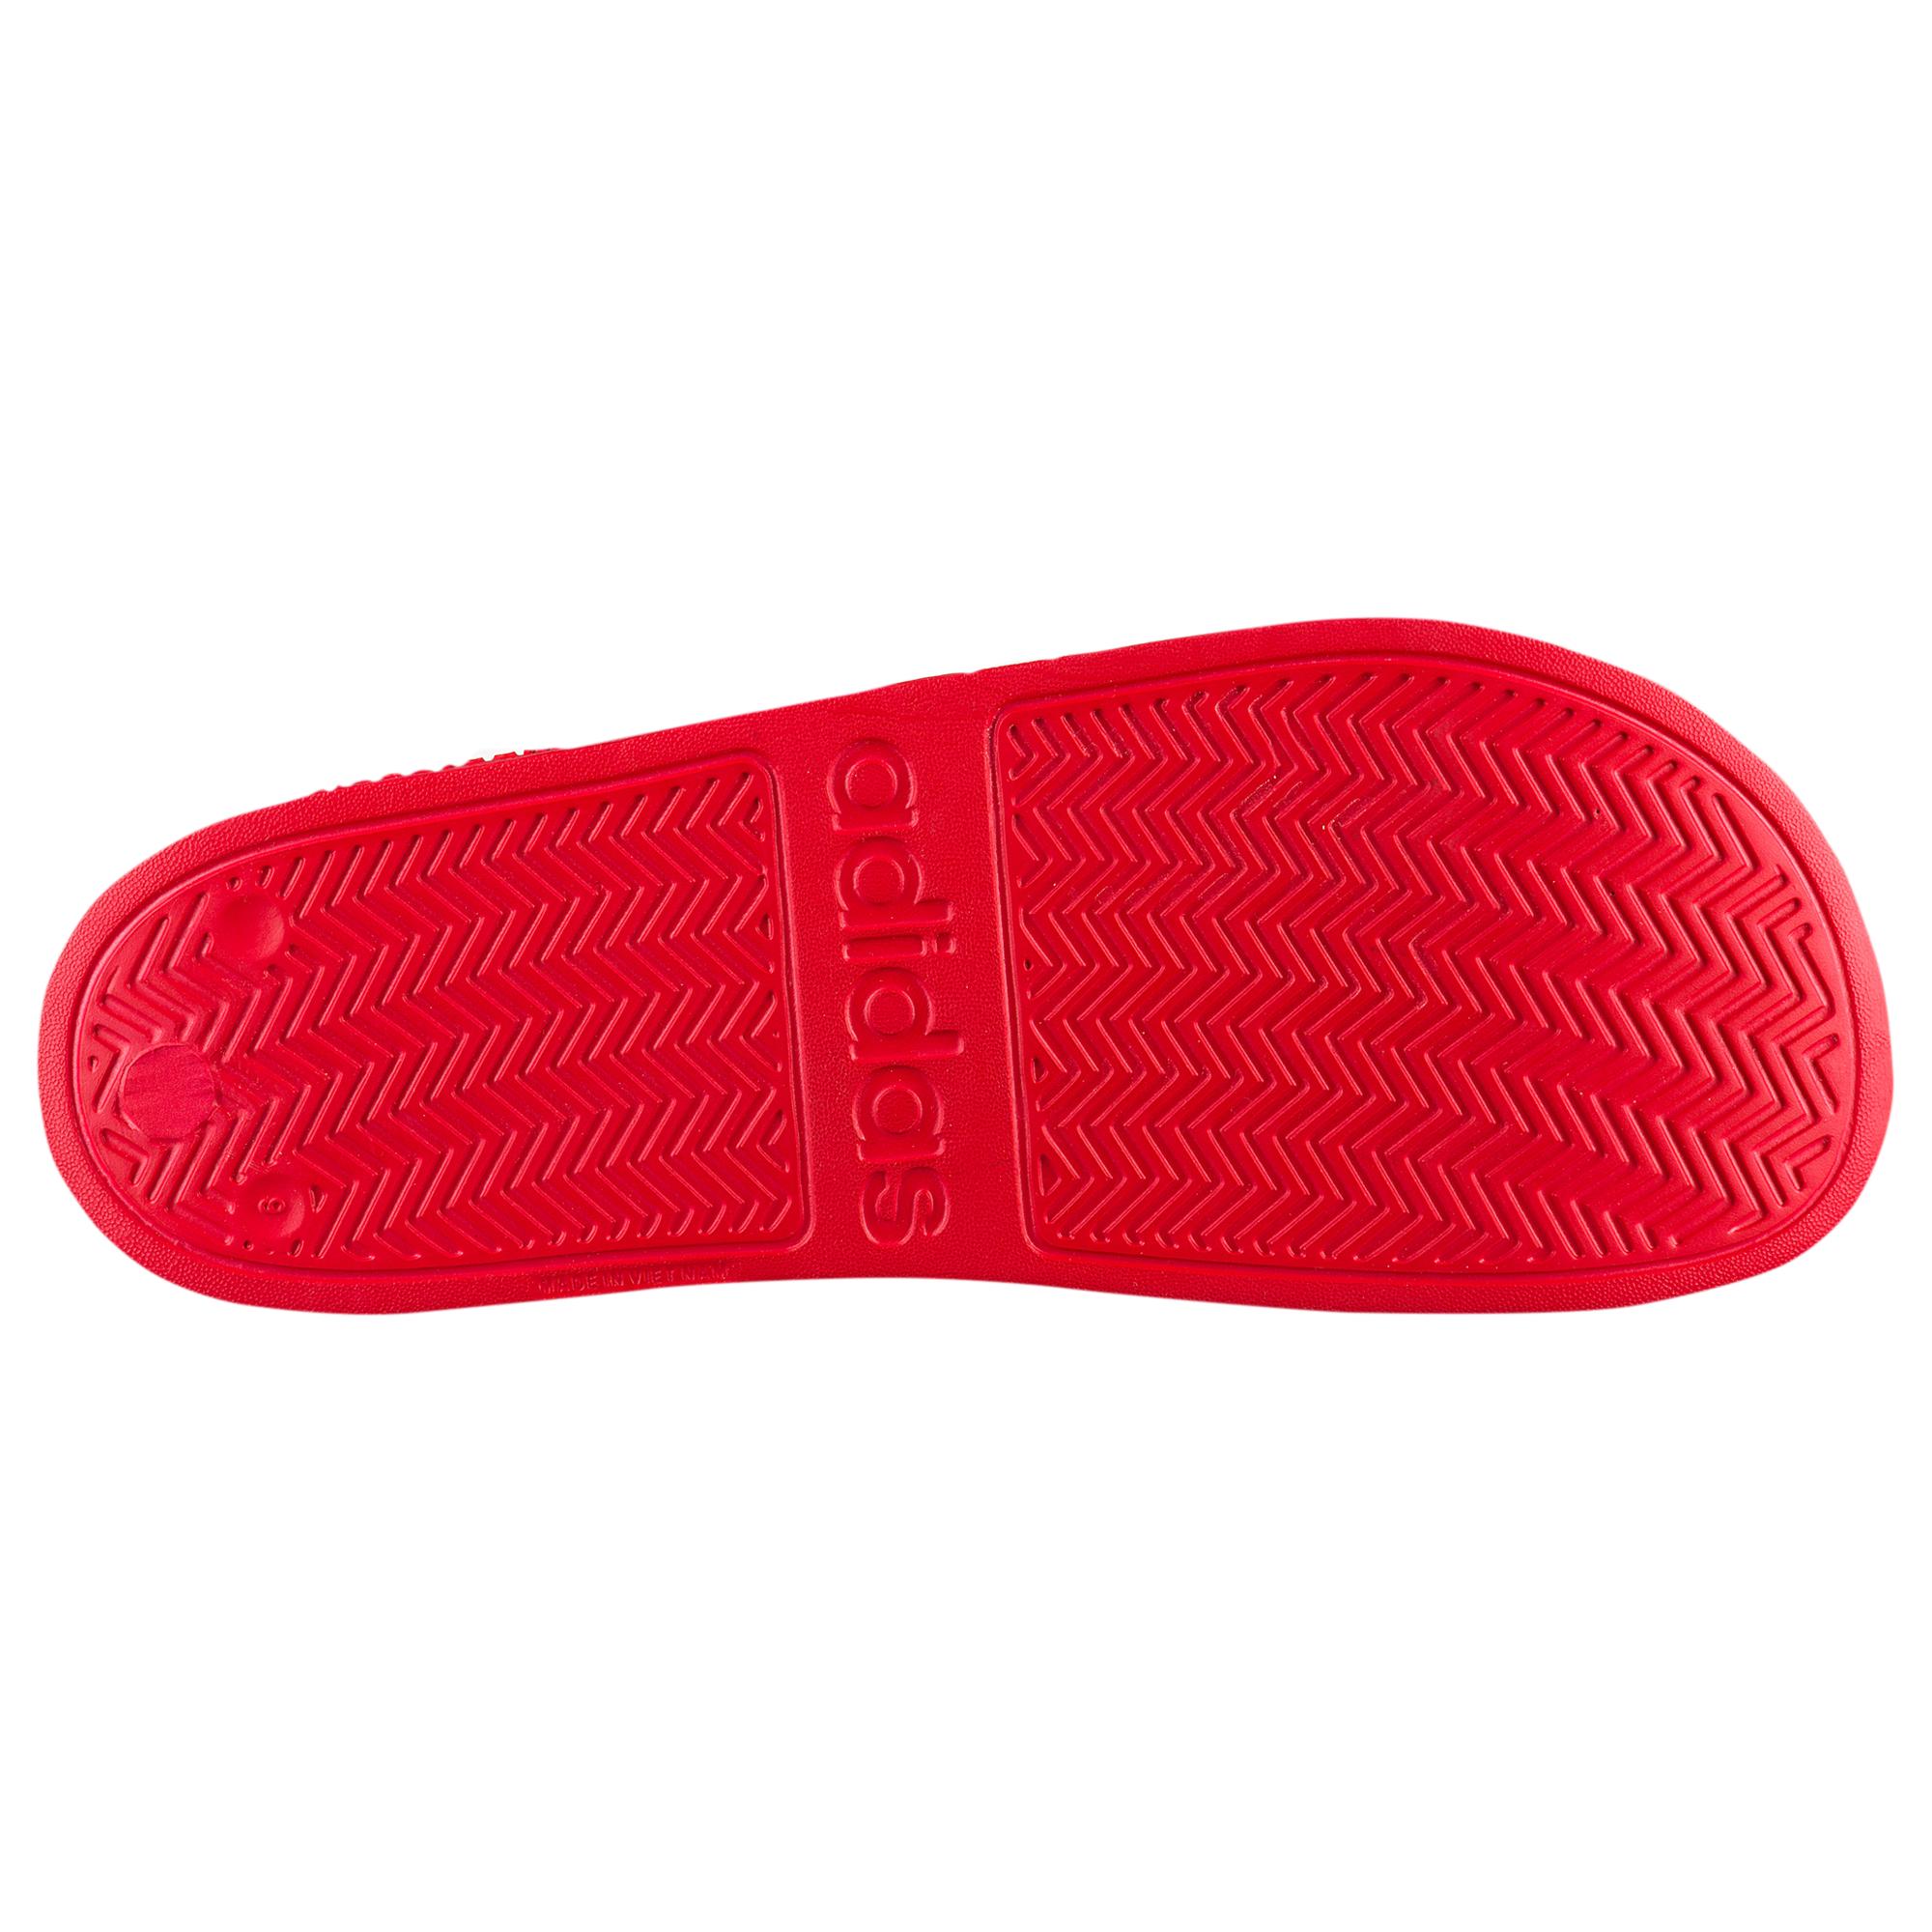 adidas Adilette Shower Slide Shoes in Red for Men - Lyst